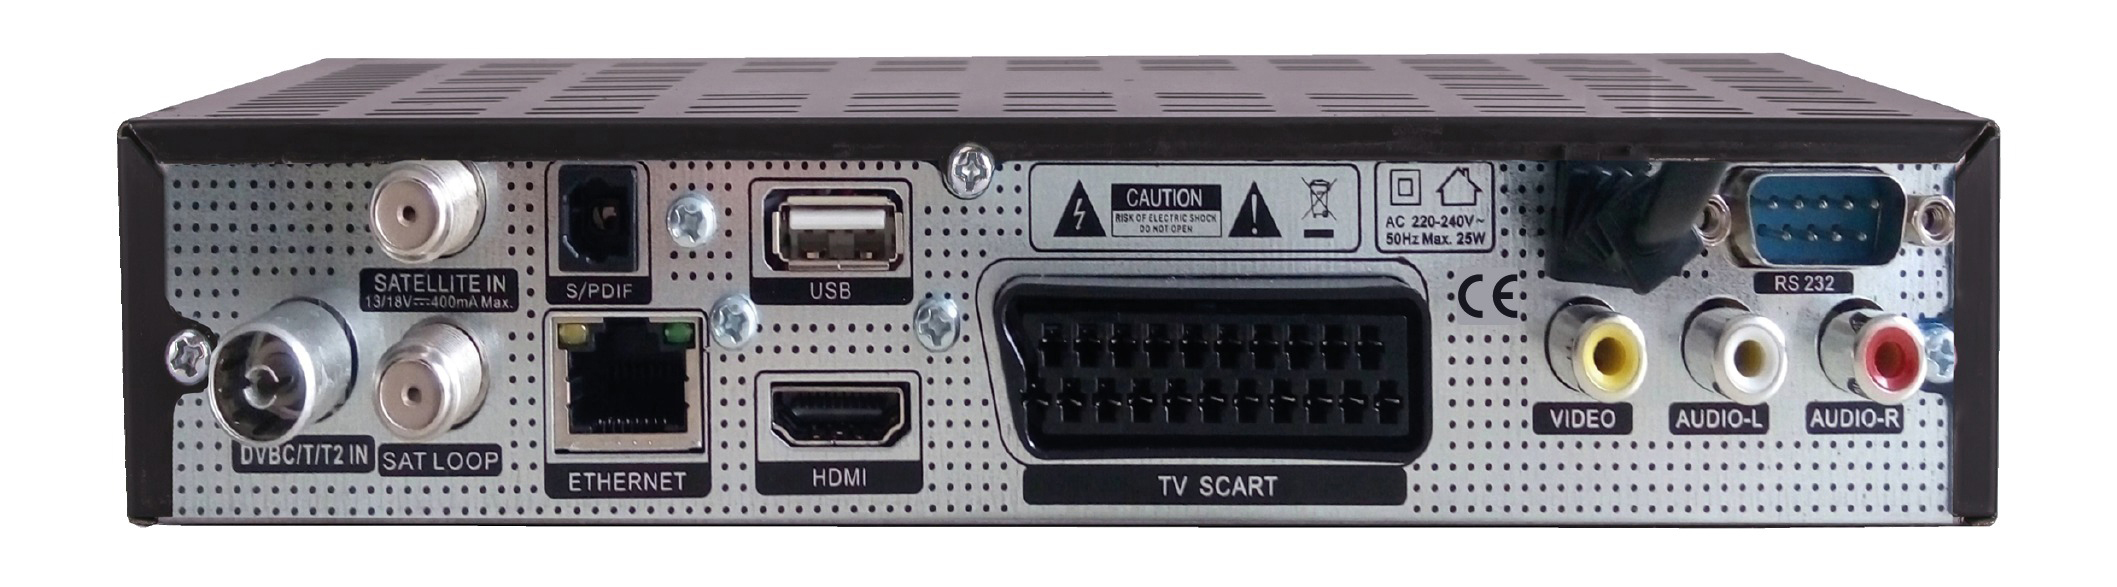 OPTICUM RED Sloth Combo Receiver DVB-C, Plus Tuner, DVB-C2, DVB-T2 PVR-Funktion, PVR HD, Combo DVB-S2, Twin DVB-S, Schwarz) (HDTV